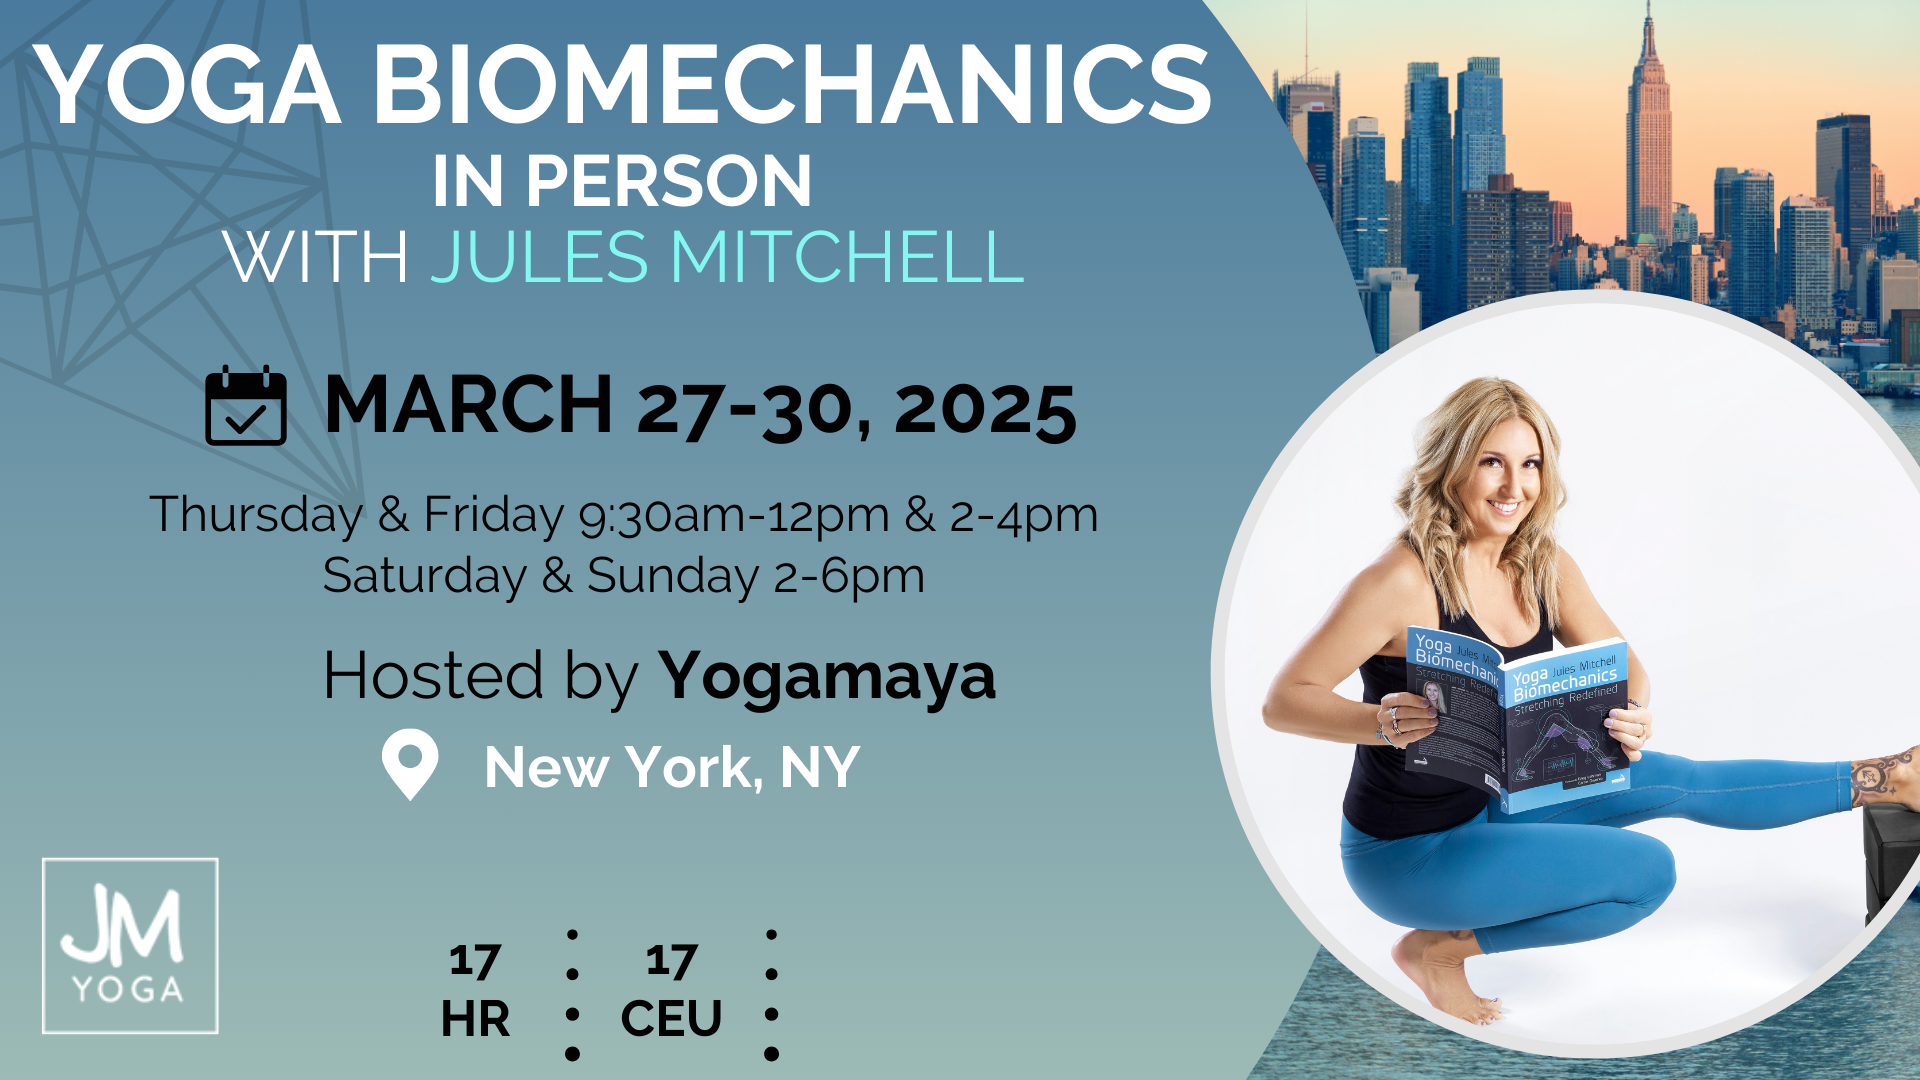 Jules Mitchell leads a yoga teacher's immersion Yoga Biomechanics in New York